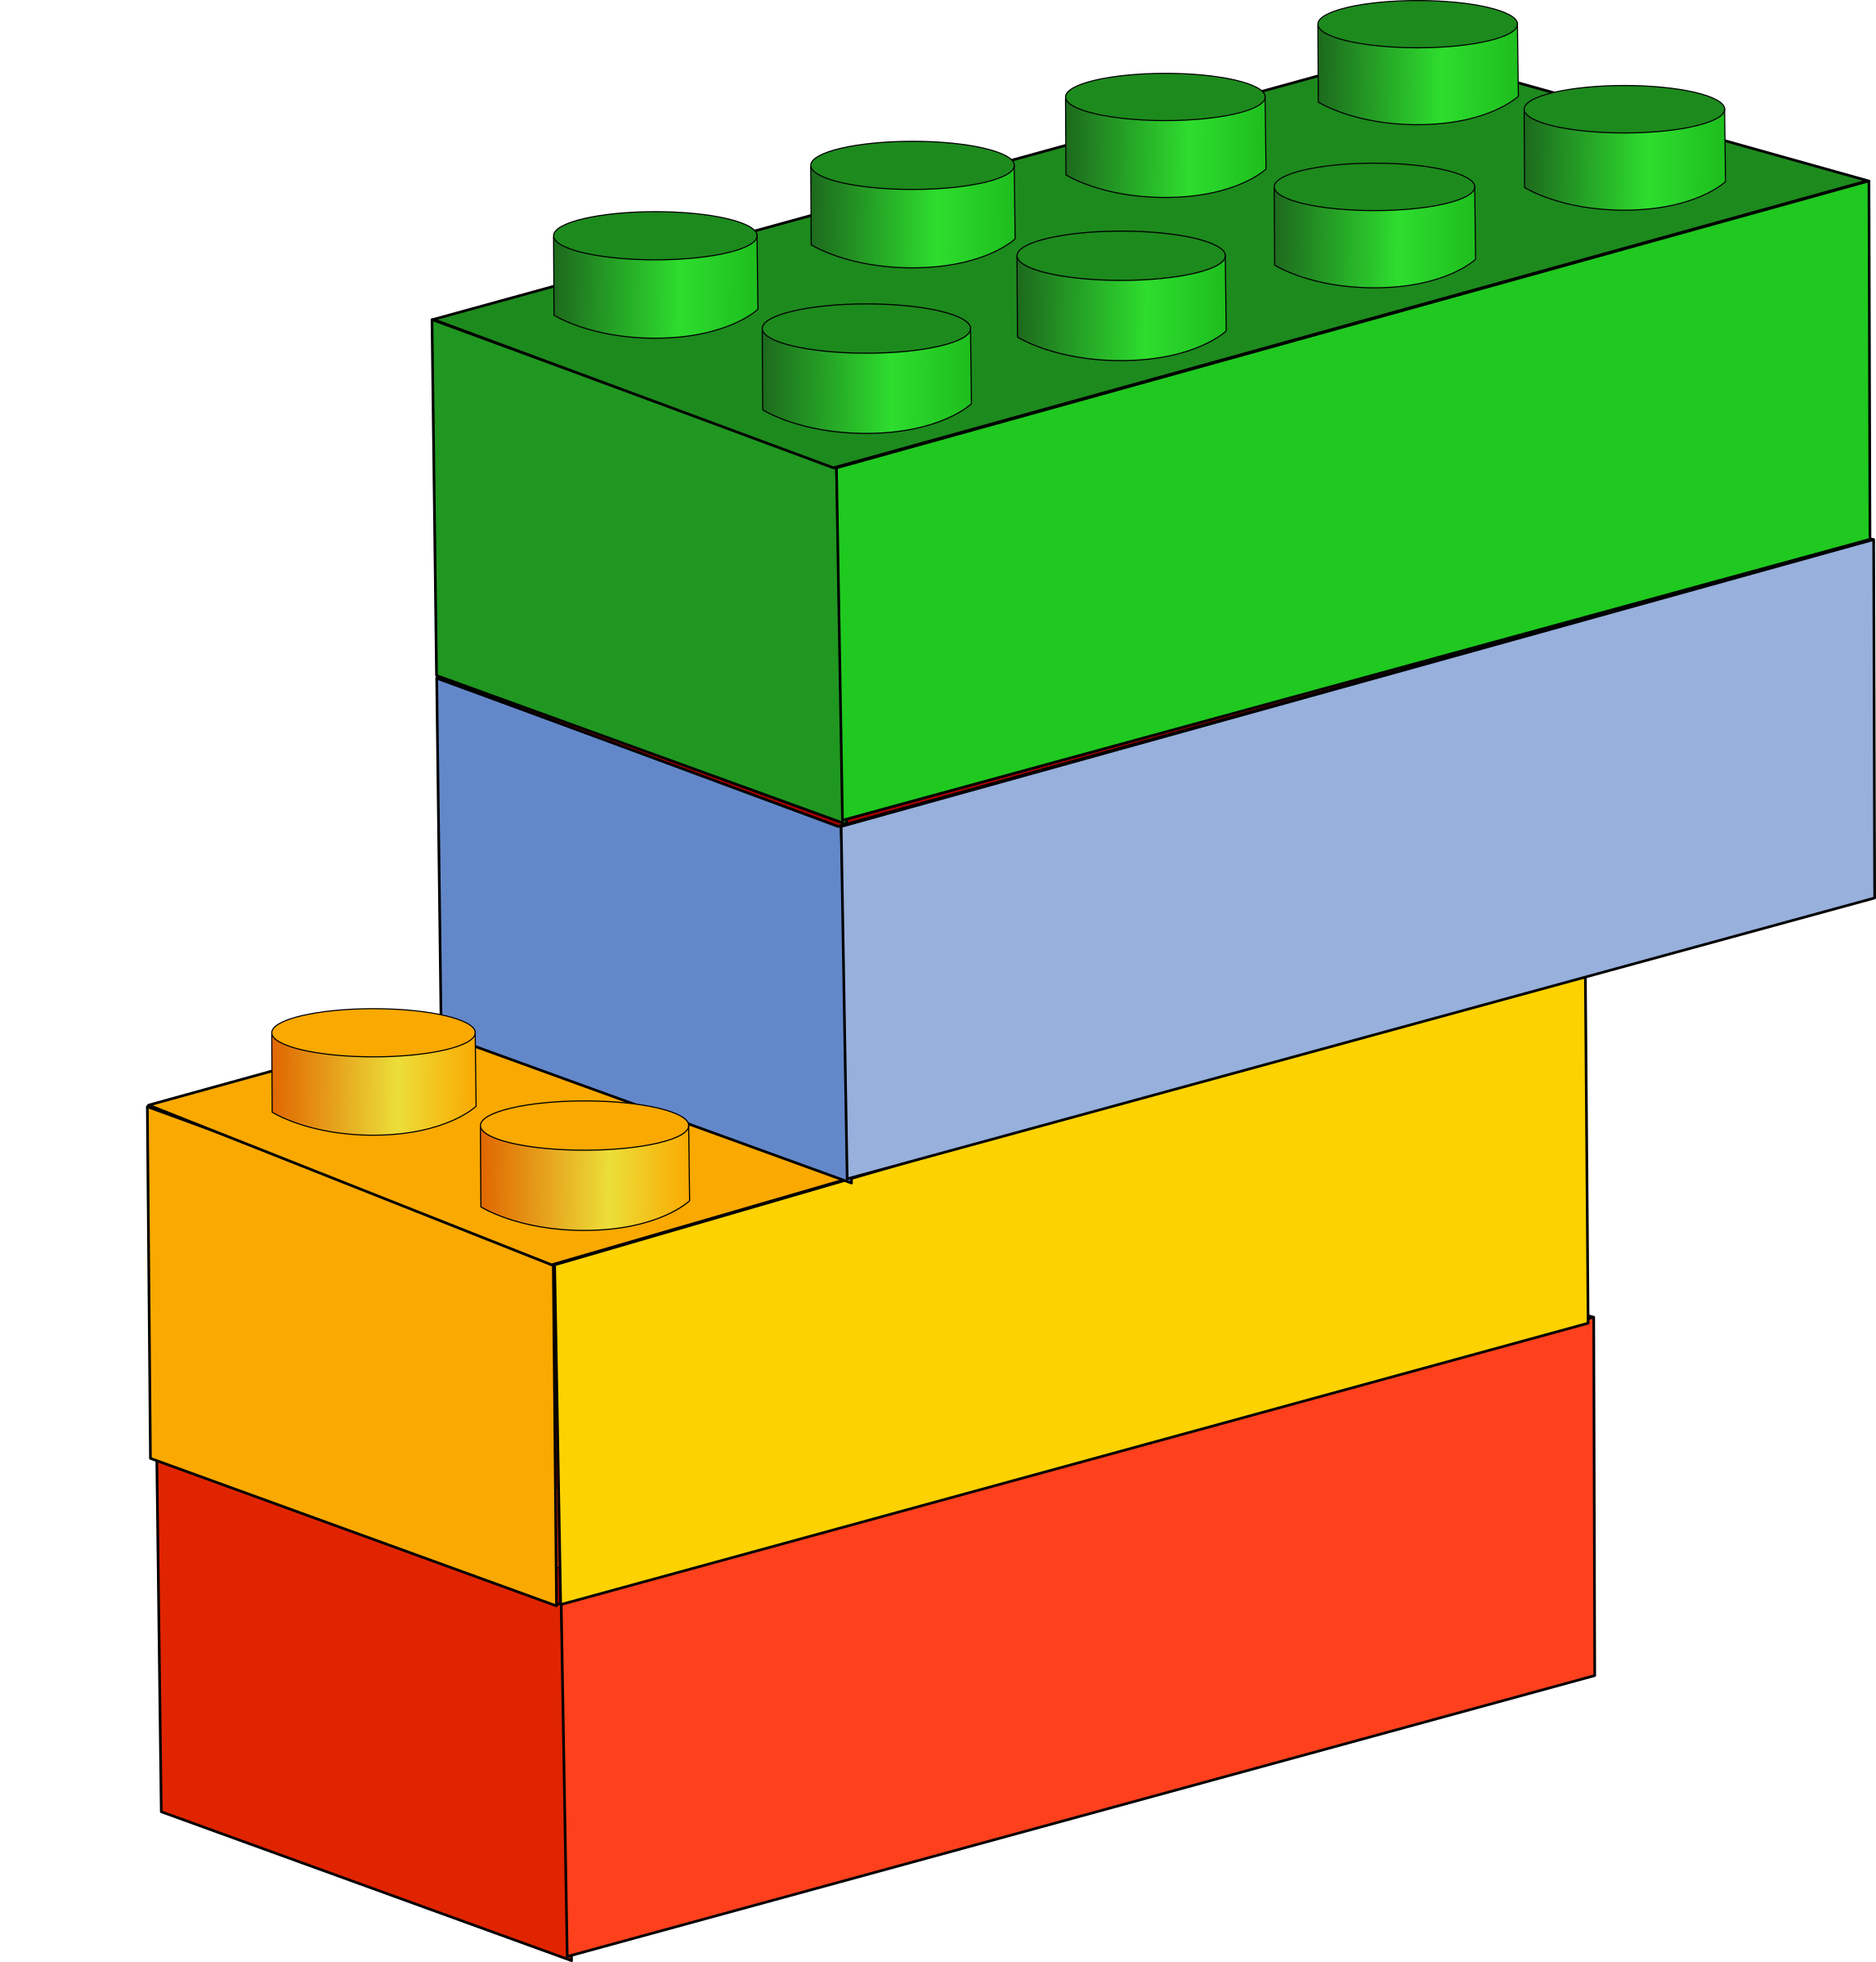 Lego Blocks Vector Clipart image - Free stock photo - Public Domain